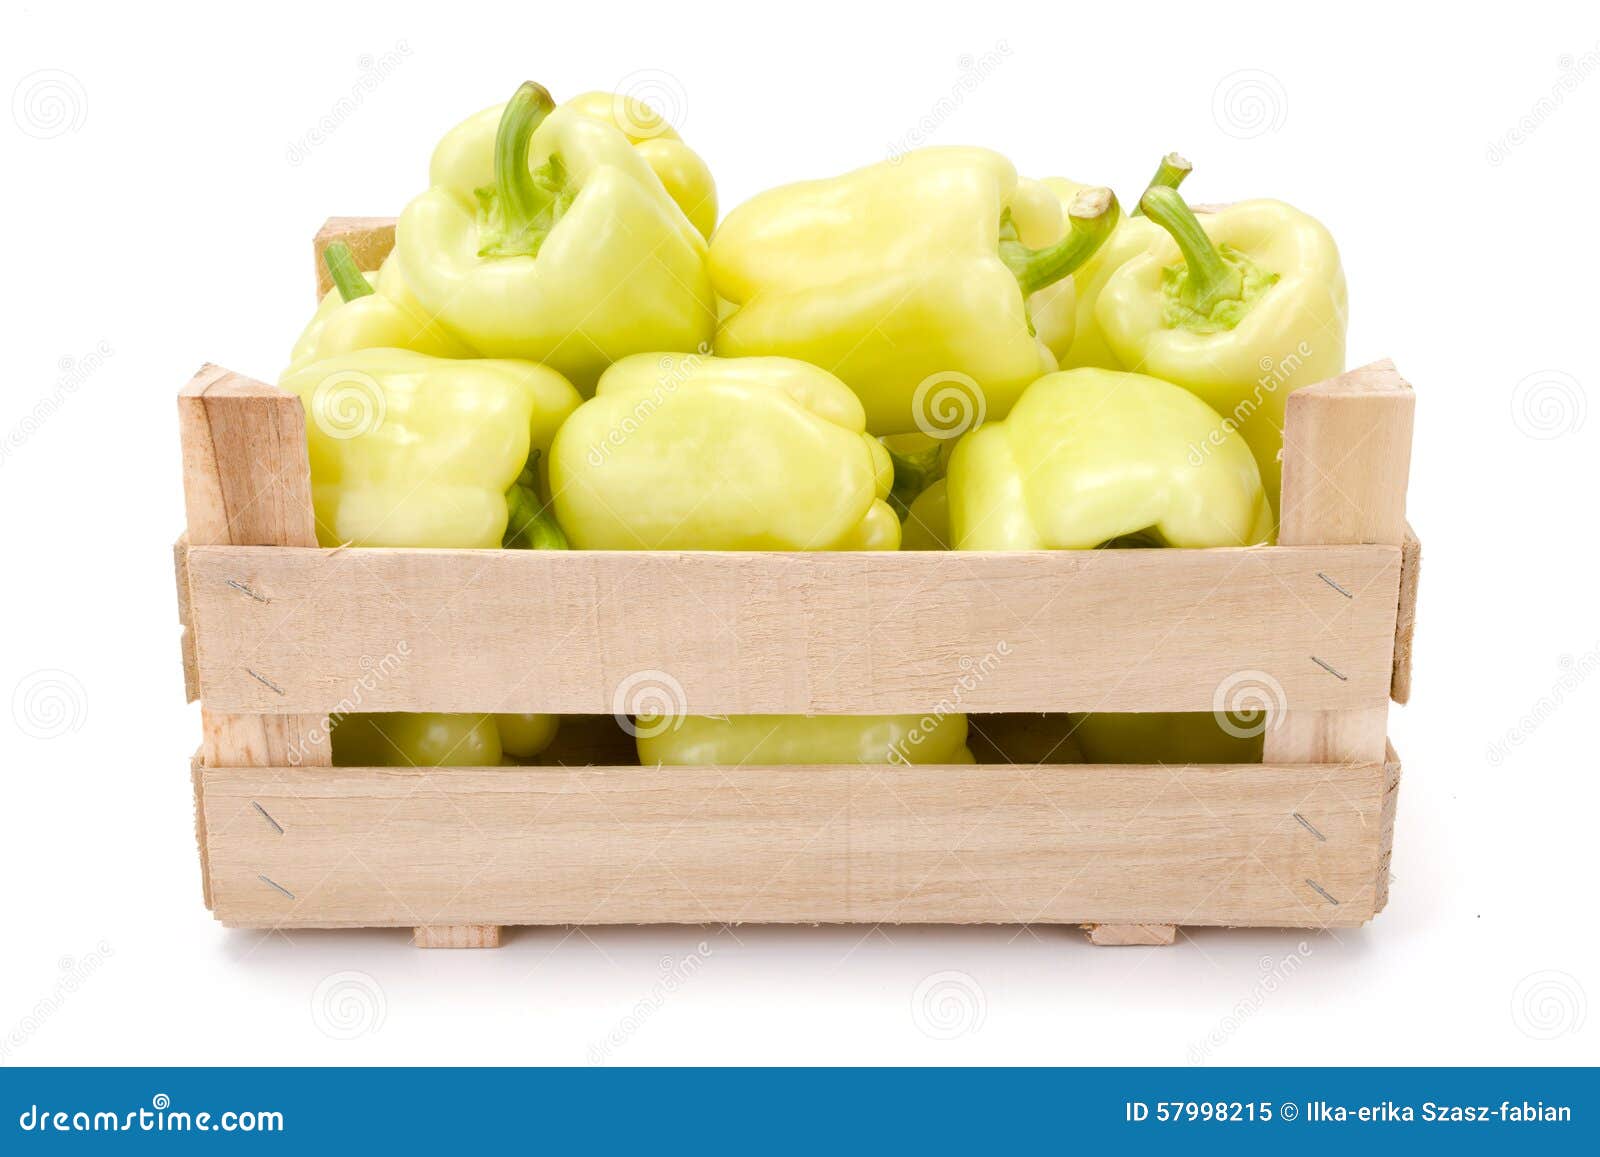 yellow bell peppers (capsicum annuum)